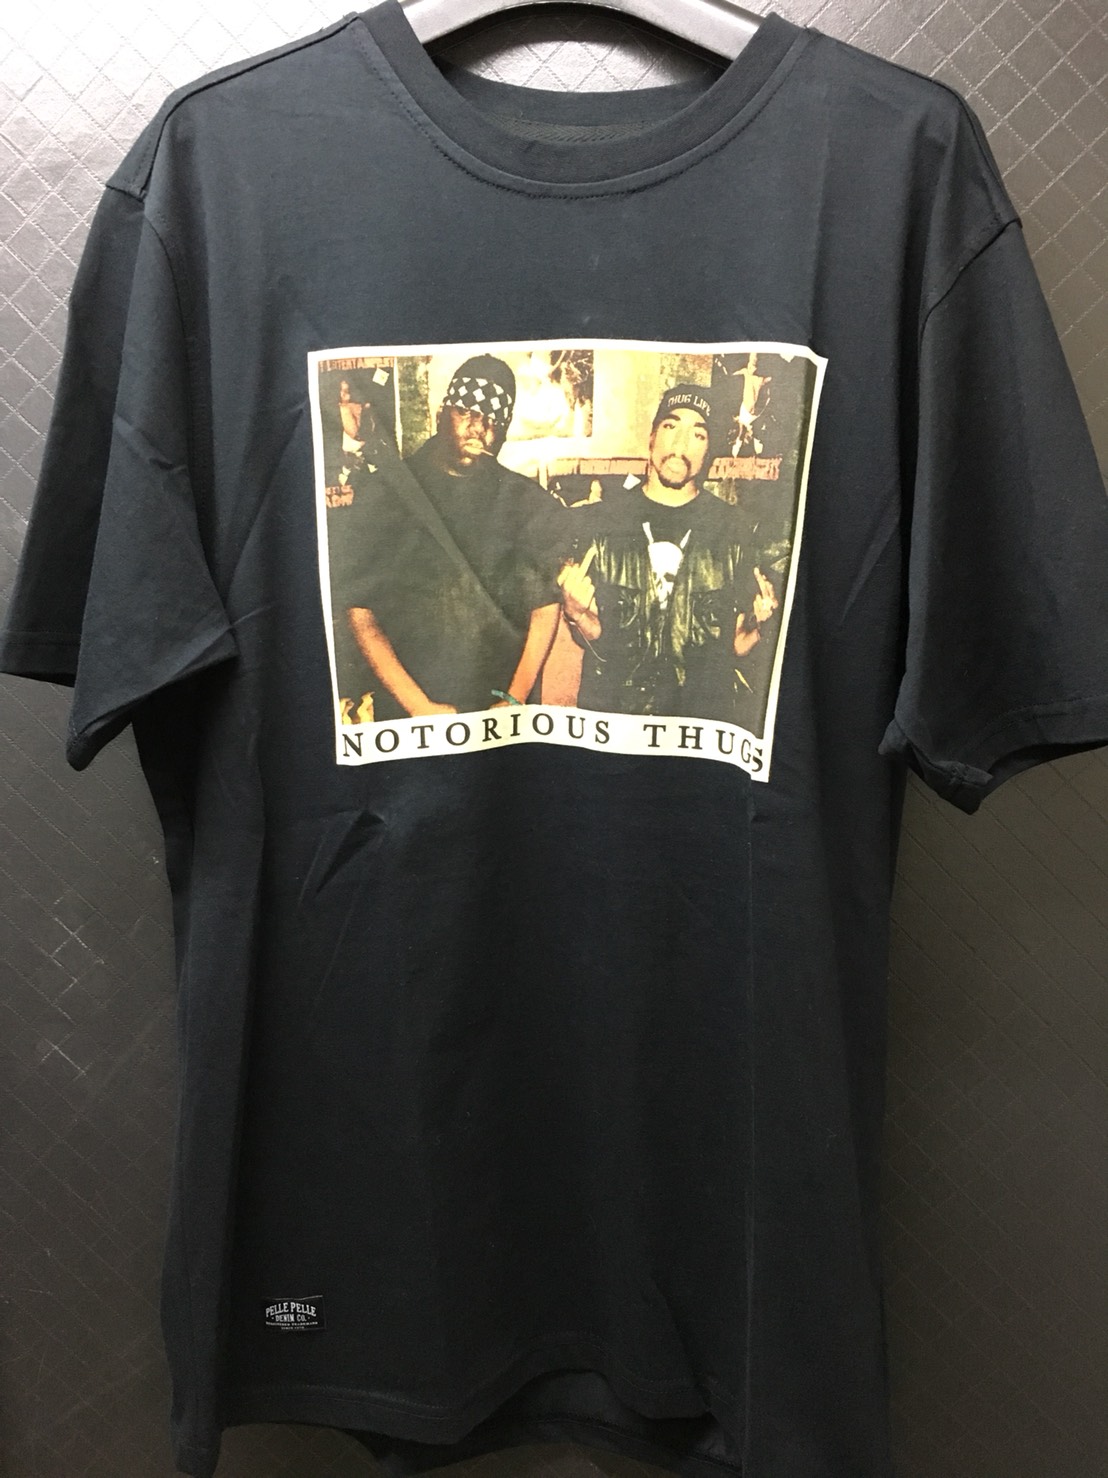 Pelle Pelle T-Shirt Notorious Thugs  Product